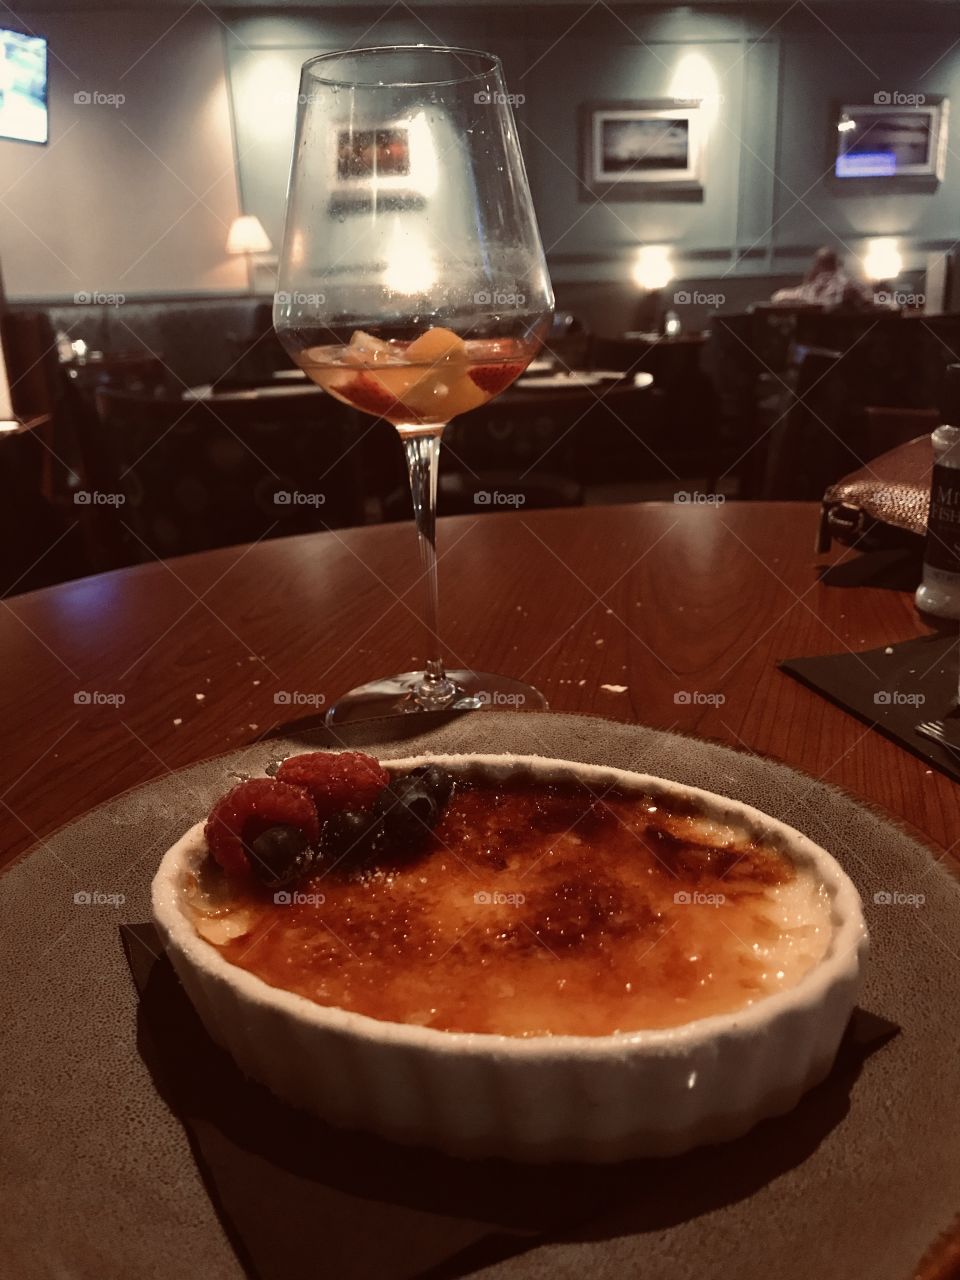 Dessert and the  wine glass